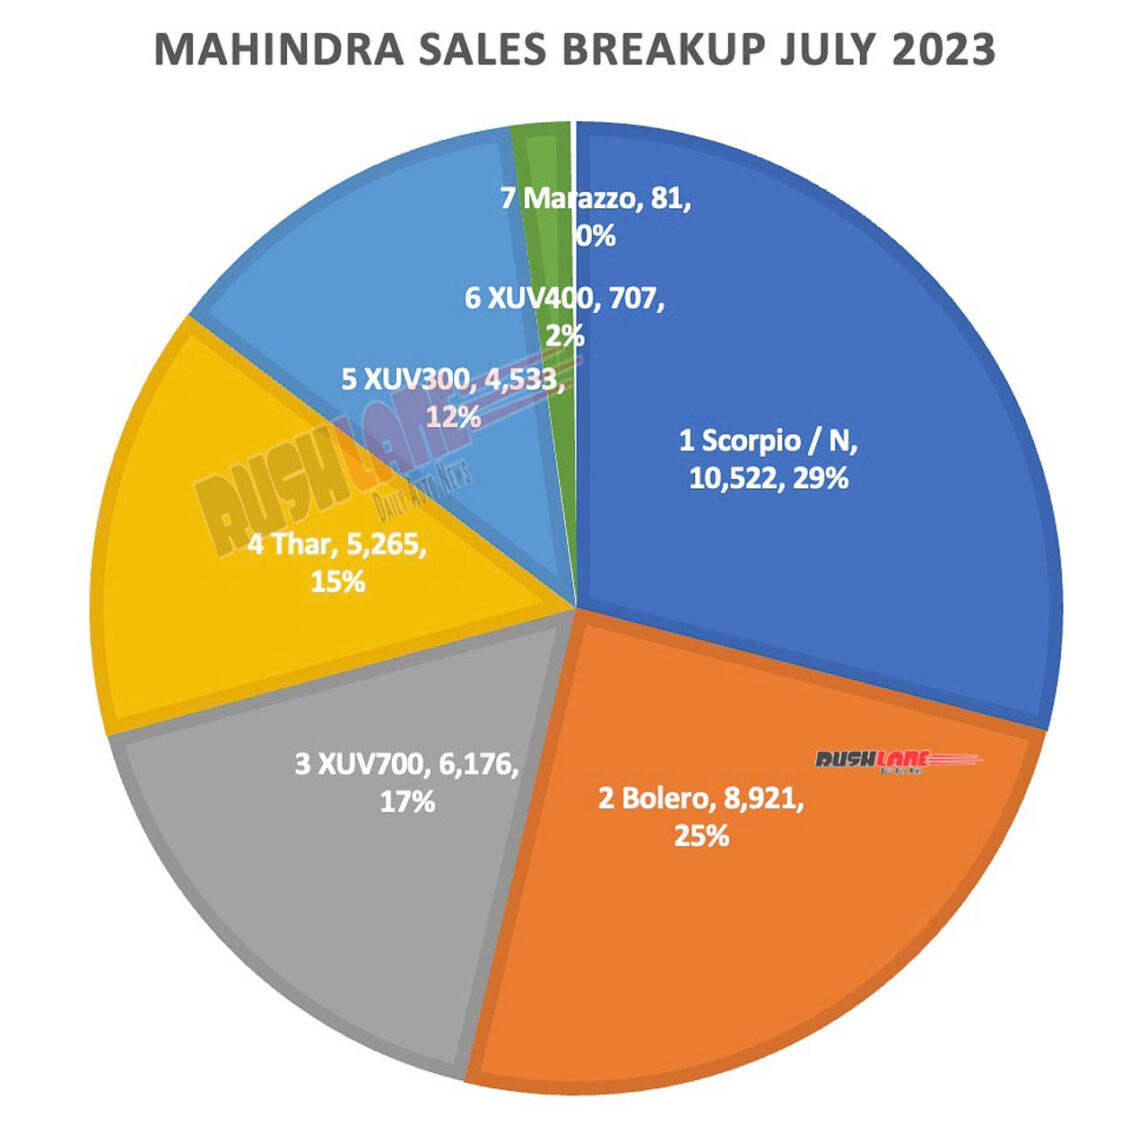 Mahindra Sales Breakup July 2023